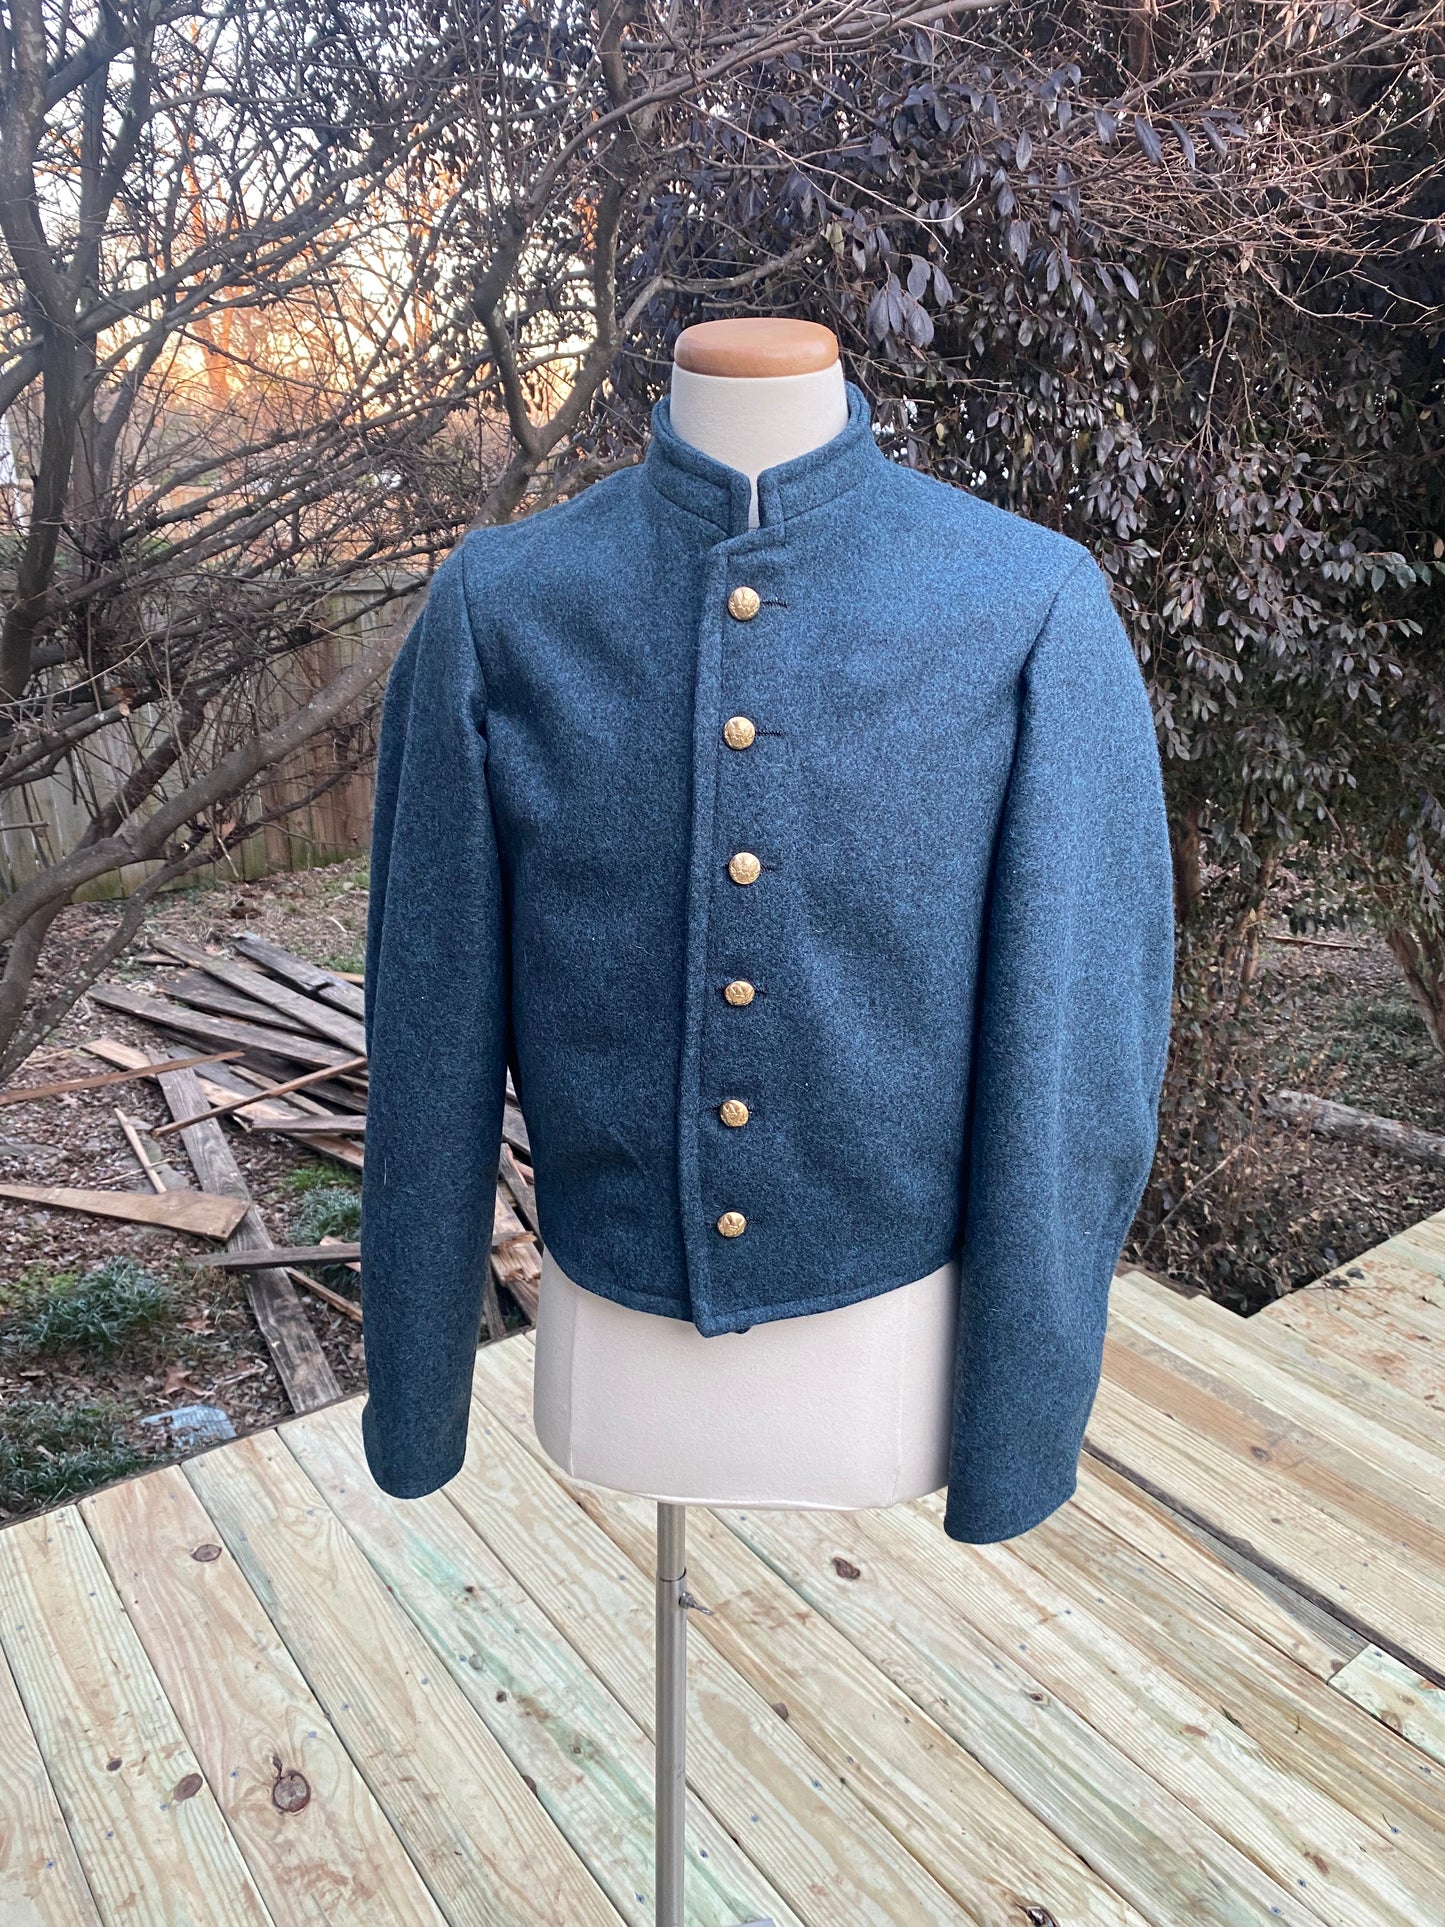 Staunton Army Factory Jacket 1864-1865